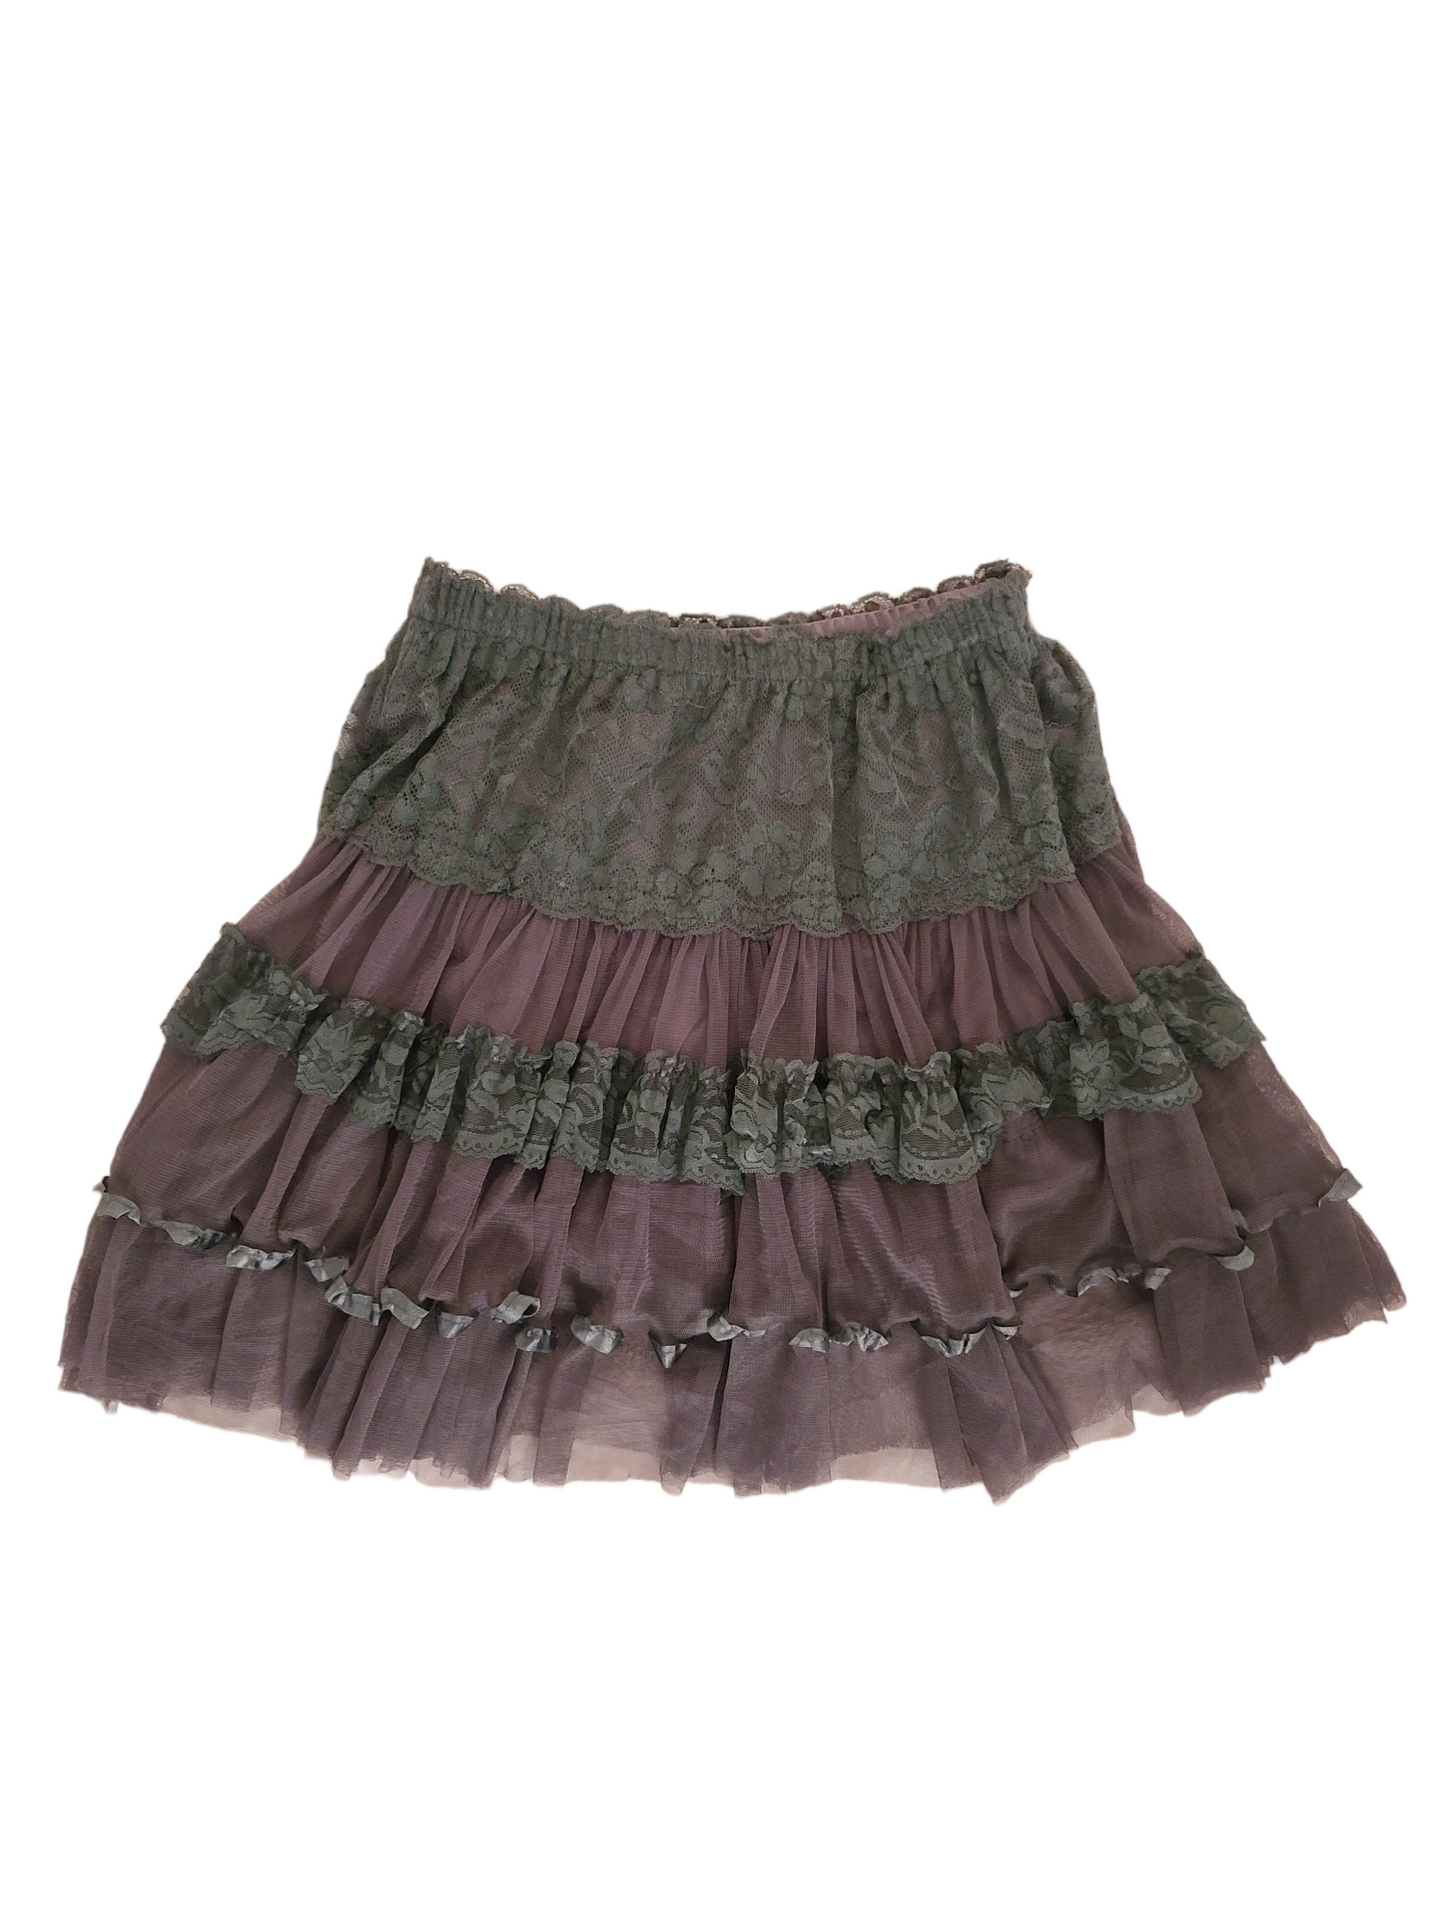 Y2k coquette ruffled vintage harajuku mesh cute kawaii mini skirt fairy lace